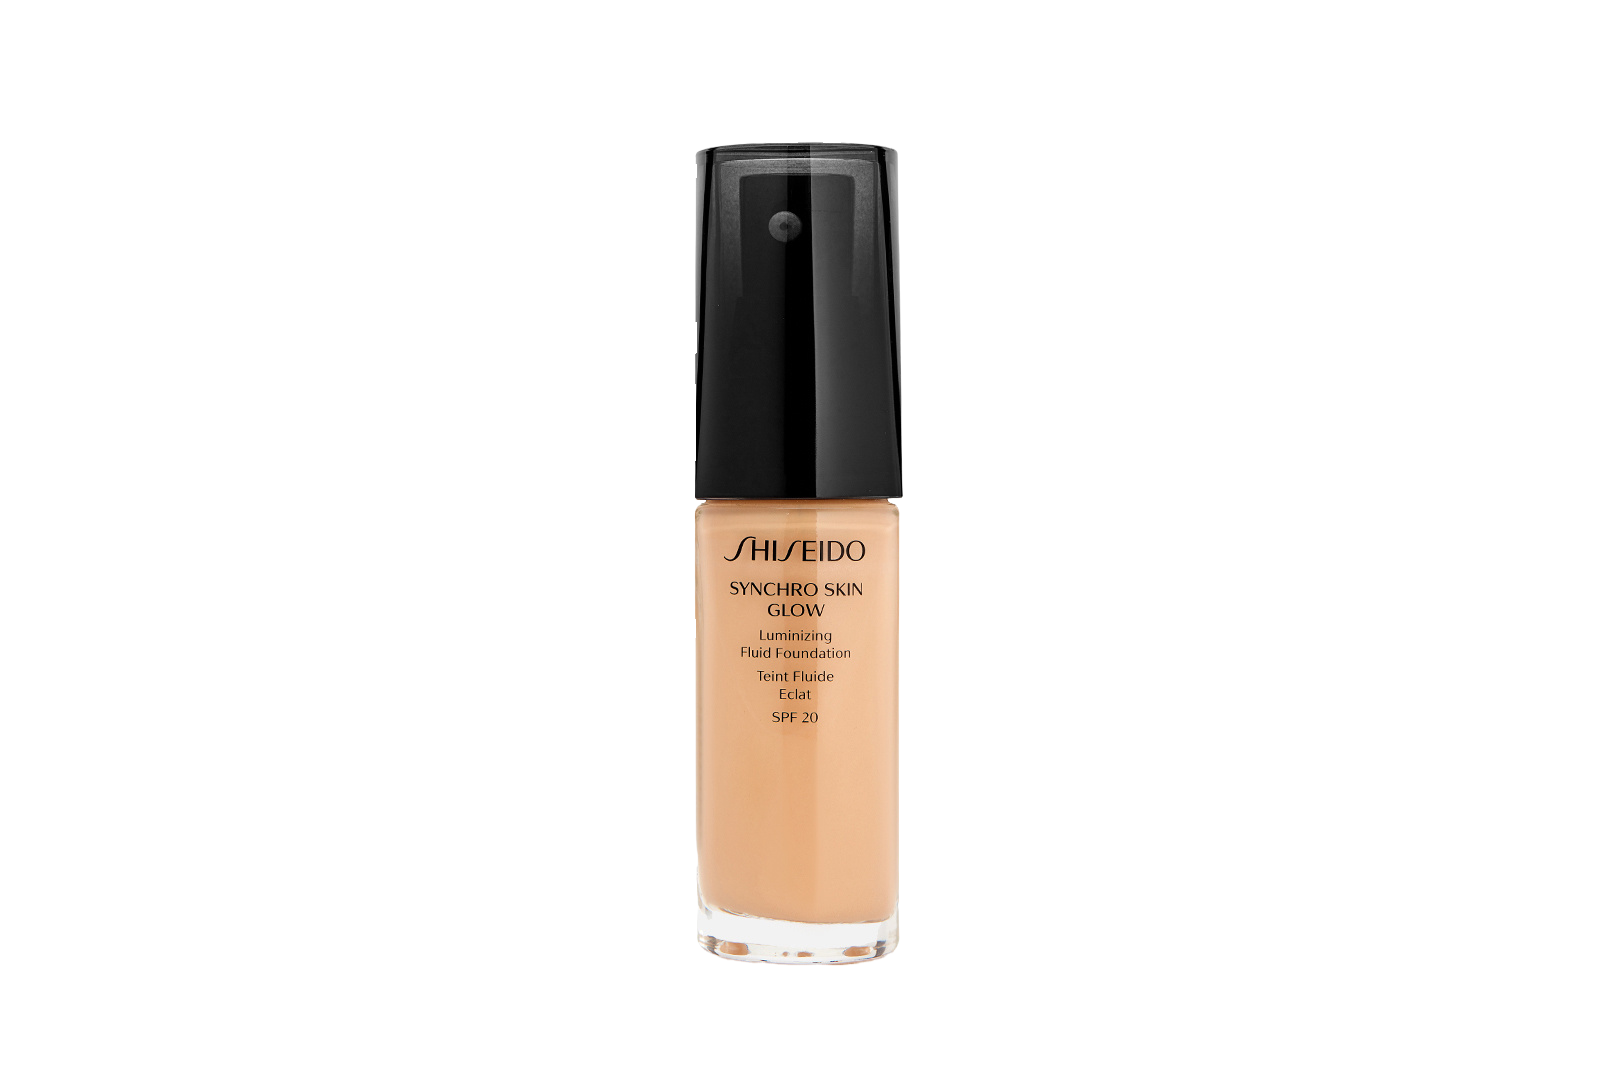 Shiseido флюид. Shiseido Synchro Skin Glow Luminizing Fluid Foundation. Shiseido Synchro Skin тональное средство. Shiseido Synchro Skin Glow. Shiseido Synchro Skin lasting Liquid Foundation.